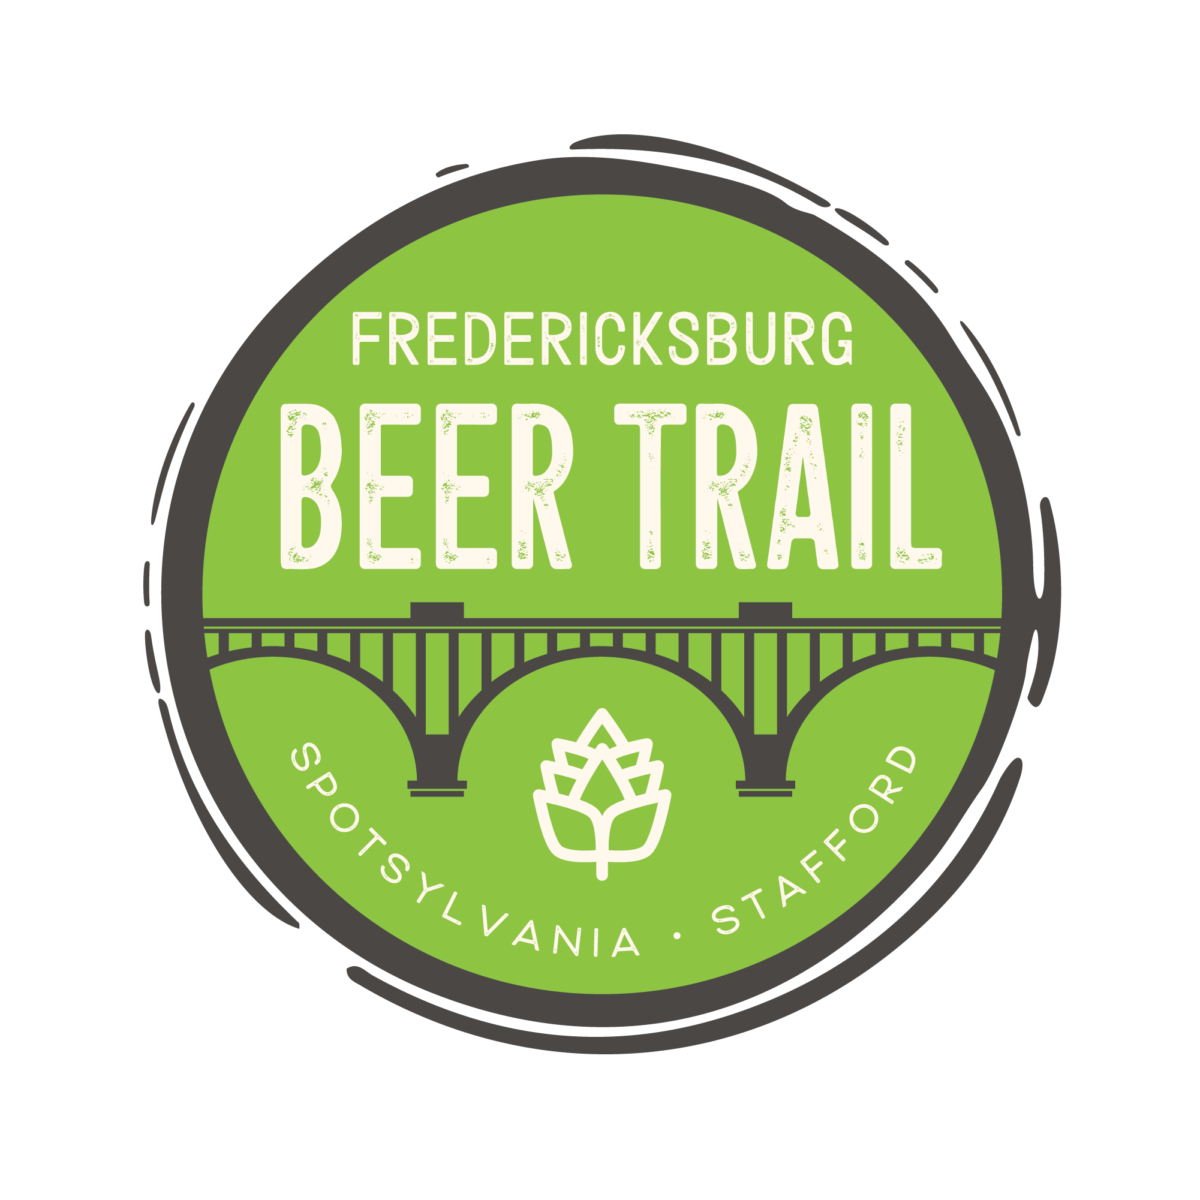 Introducing the Fredericksburg Beer Trail